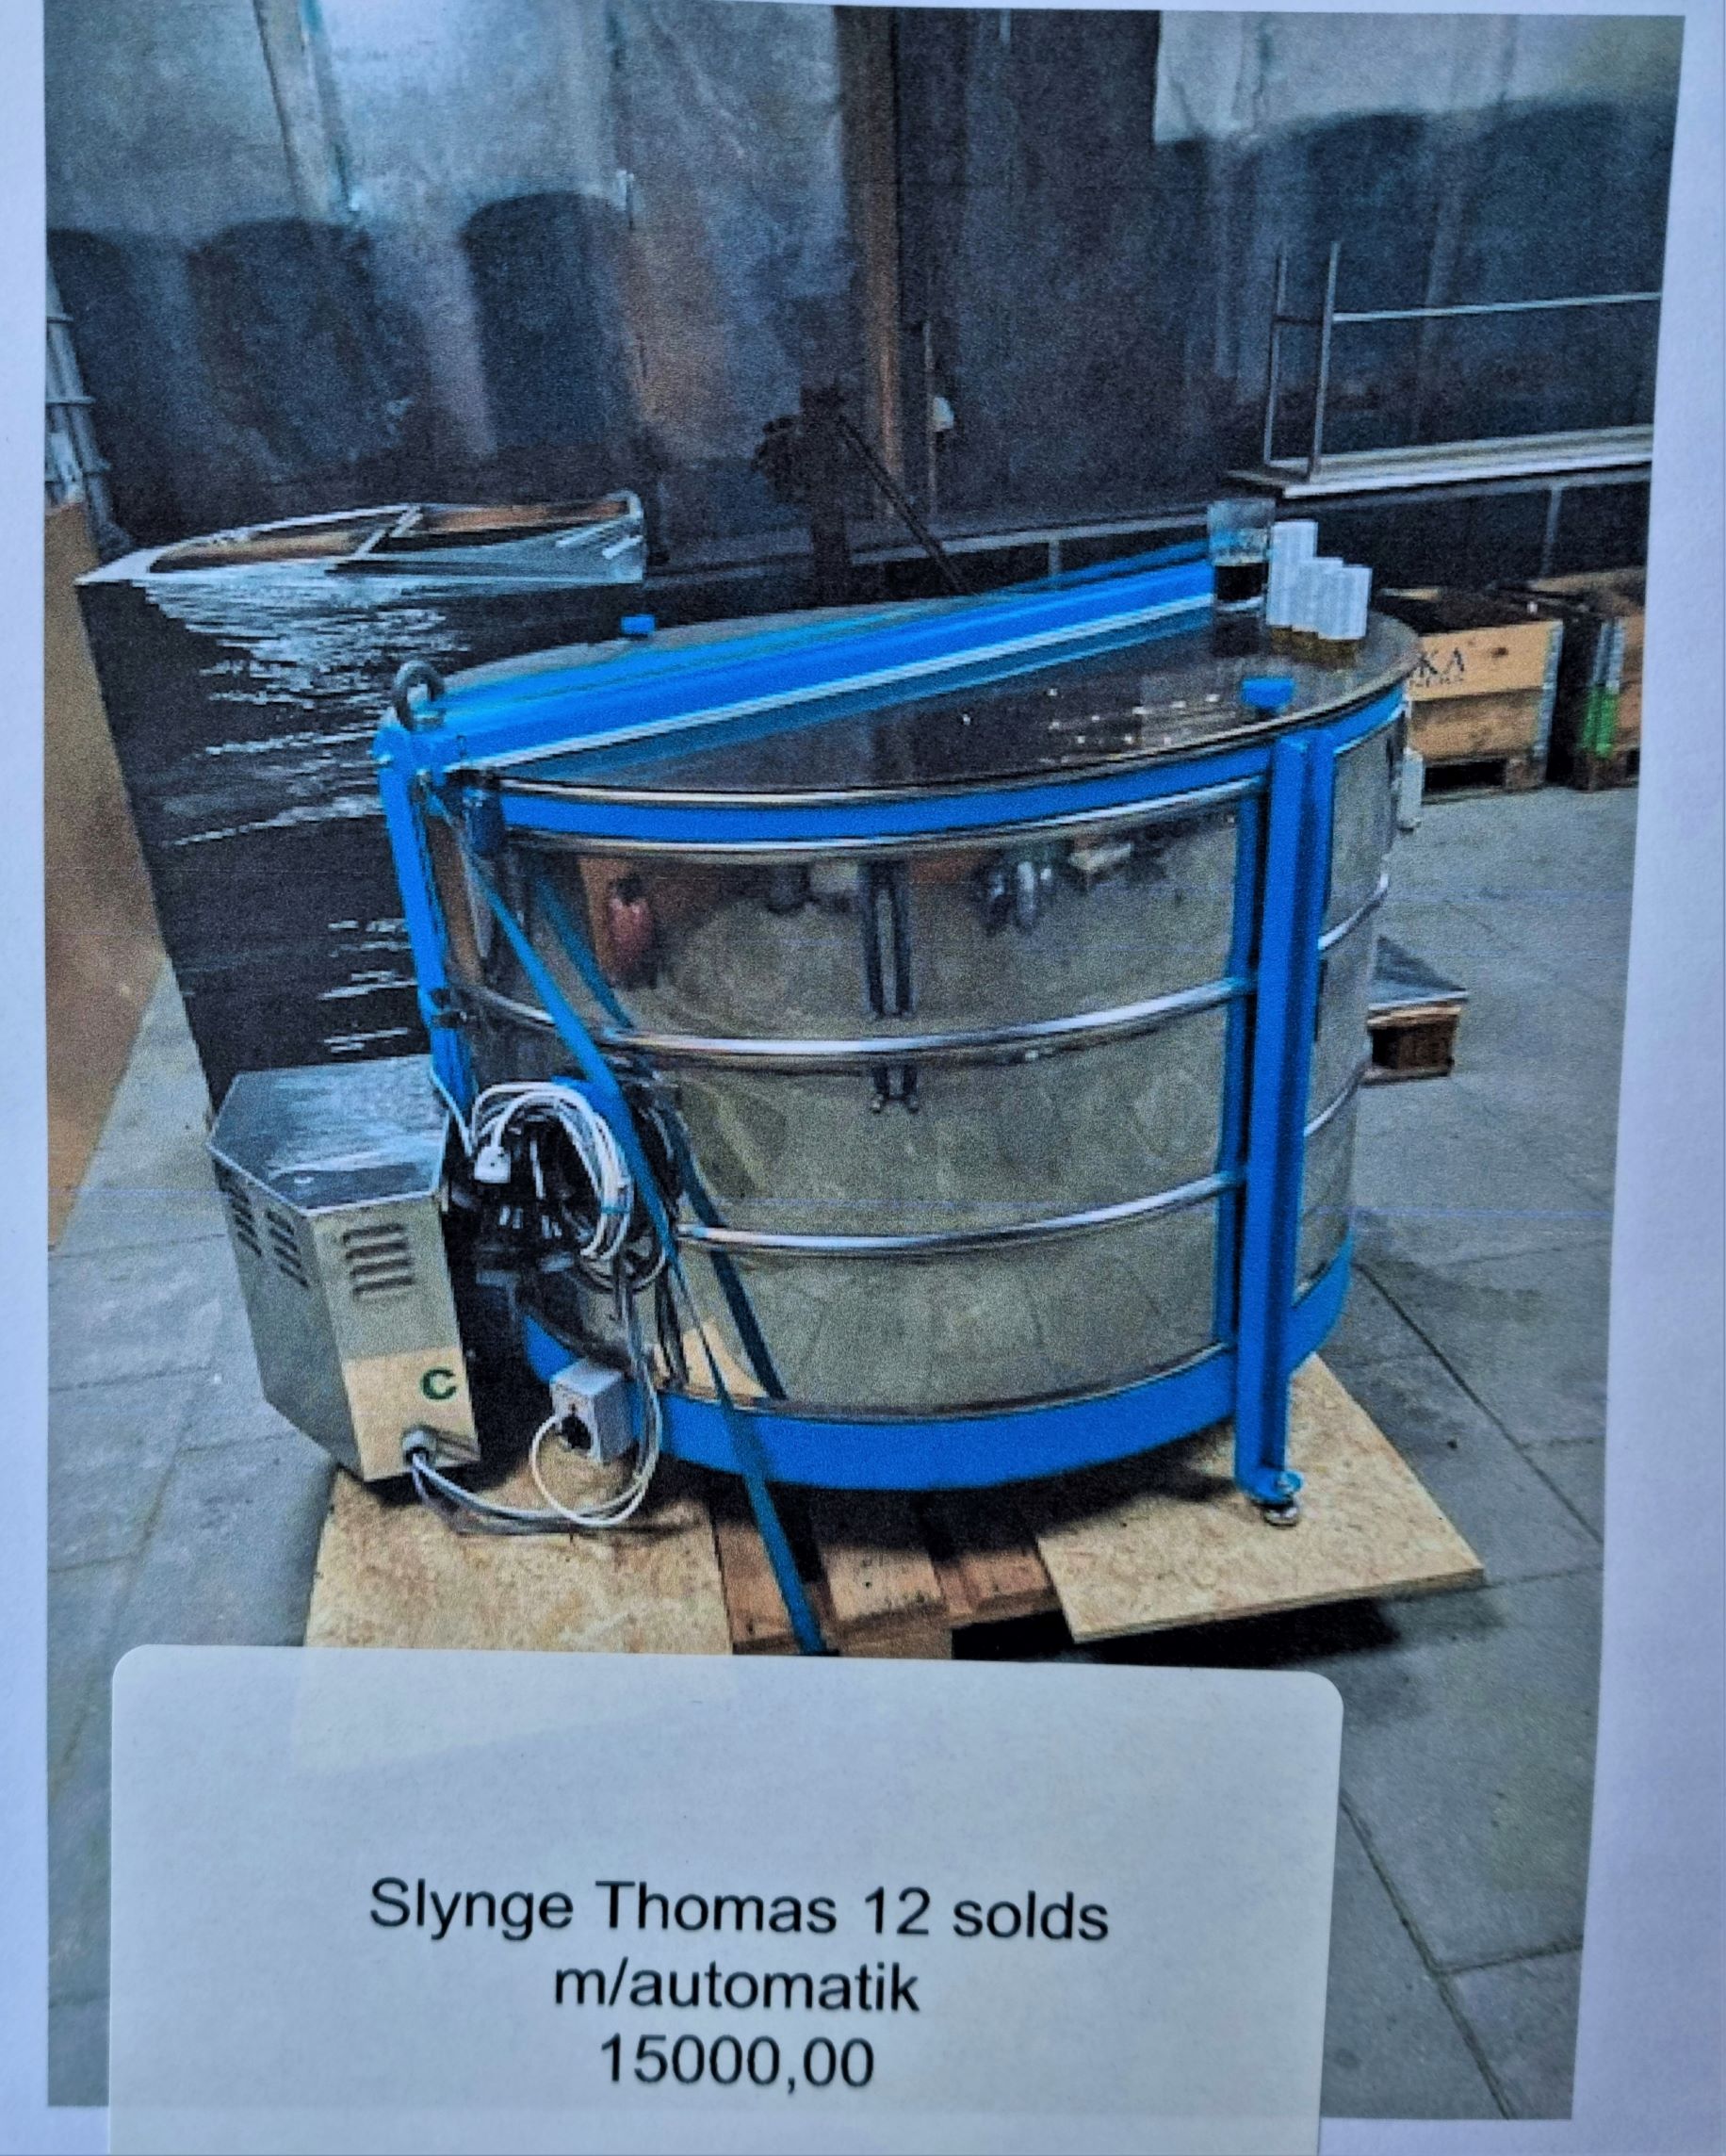 Slynge Thomas 12 solds